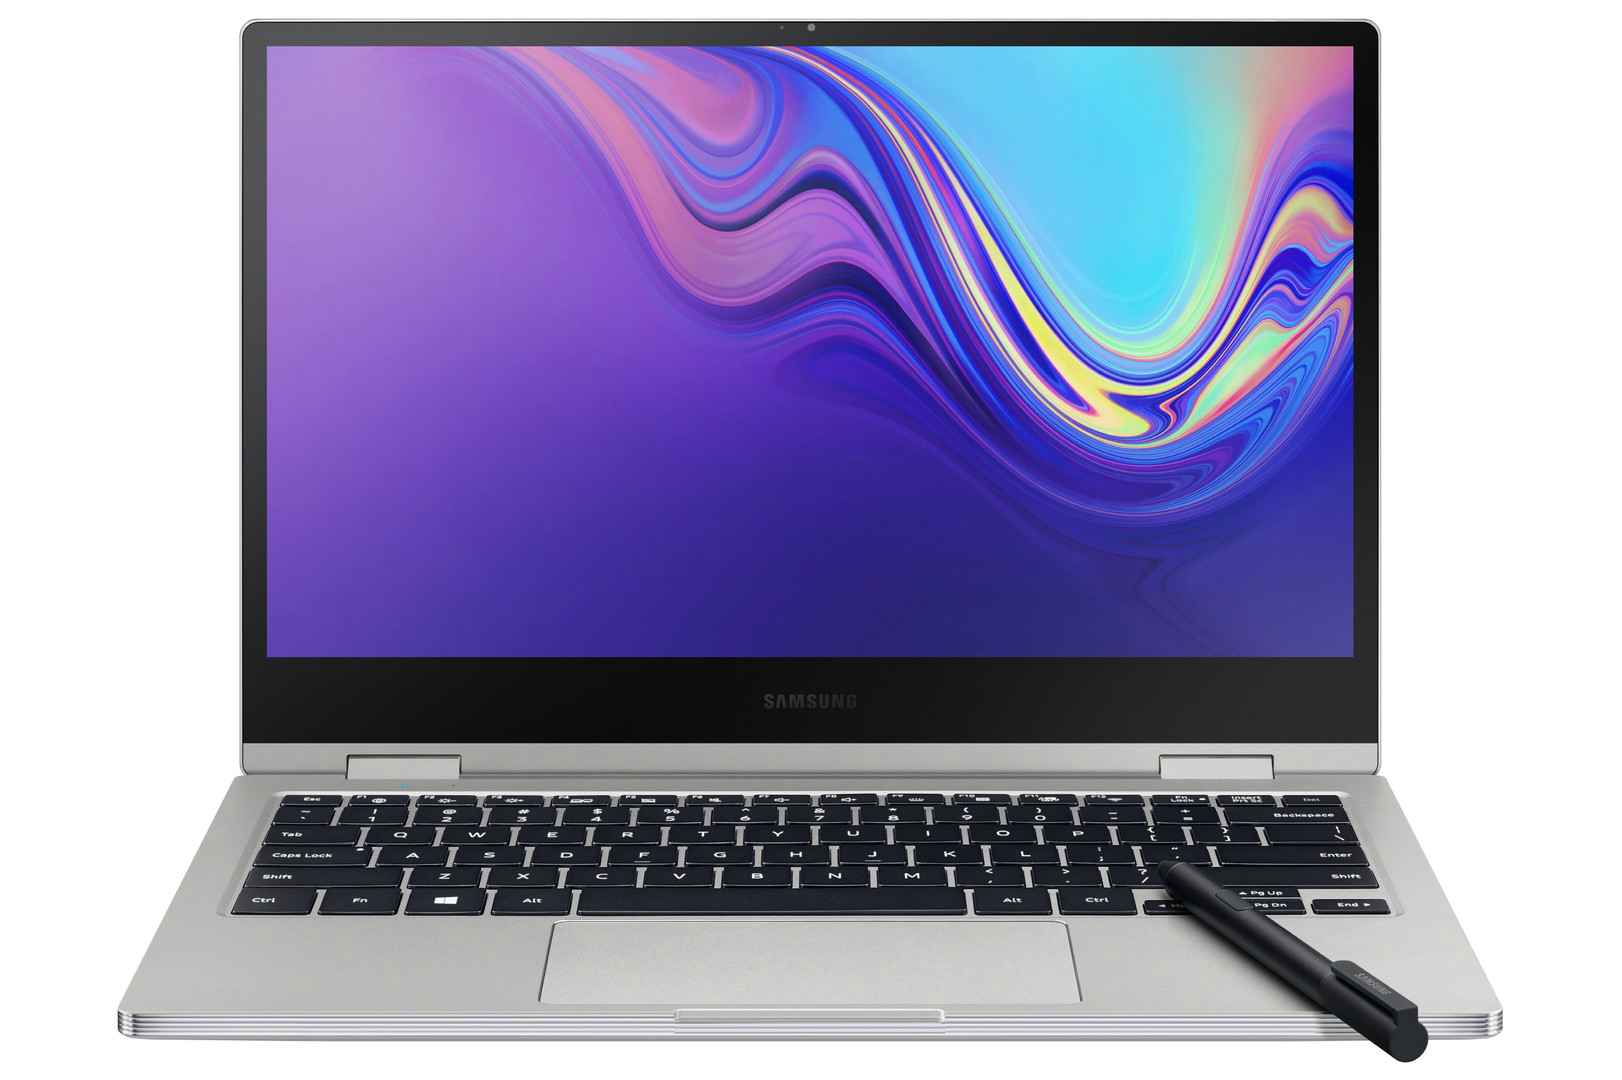 Samsung Notebook 9 Pro 2019